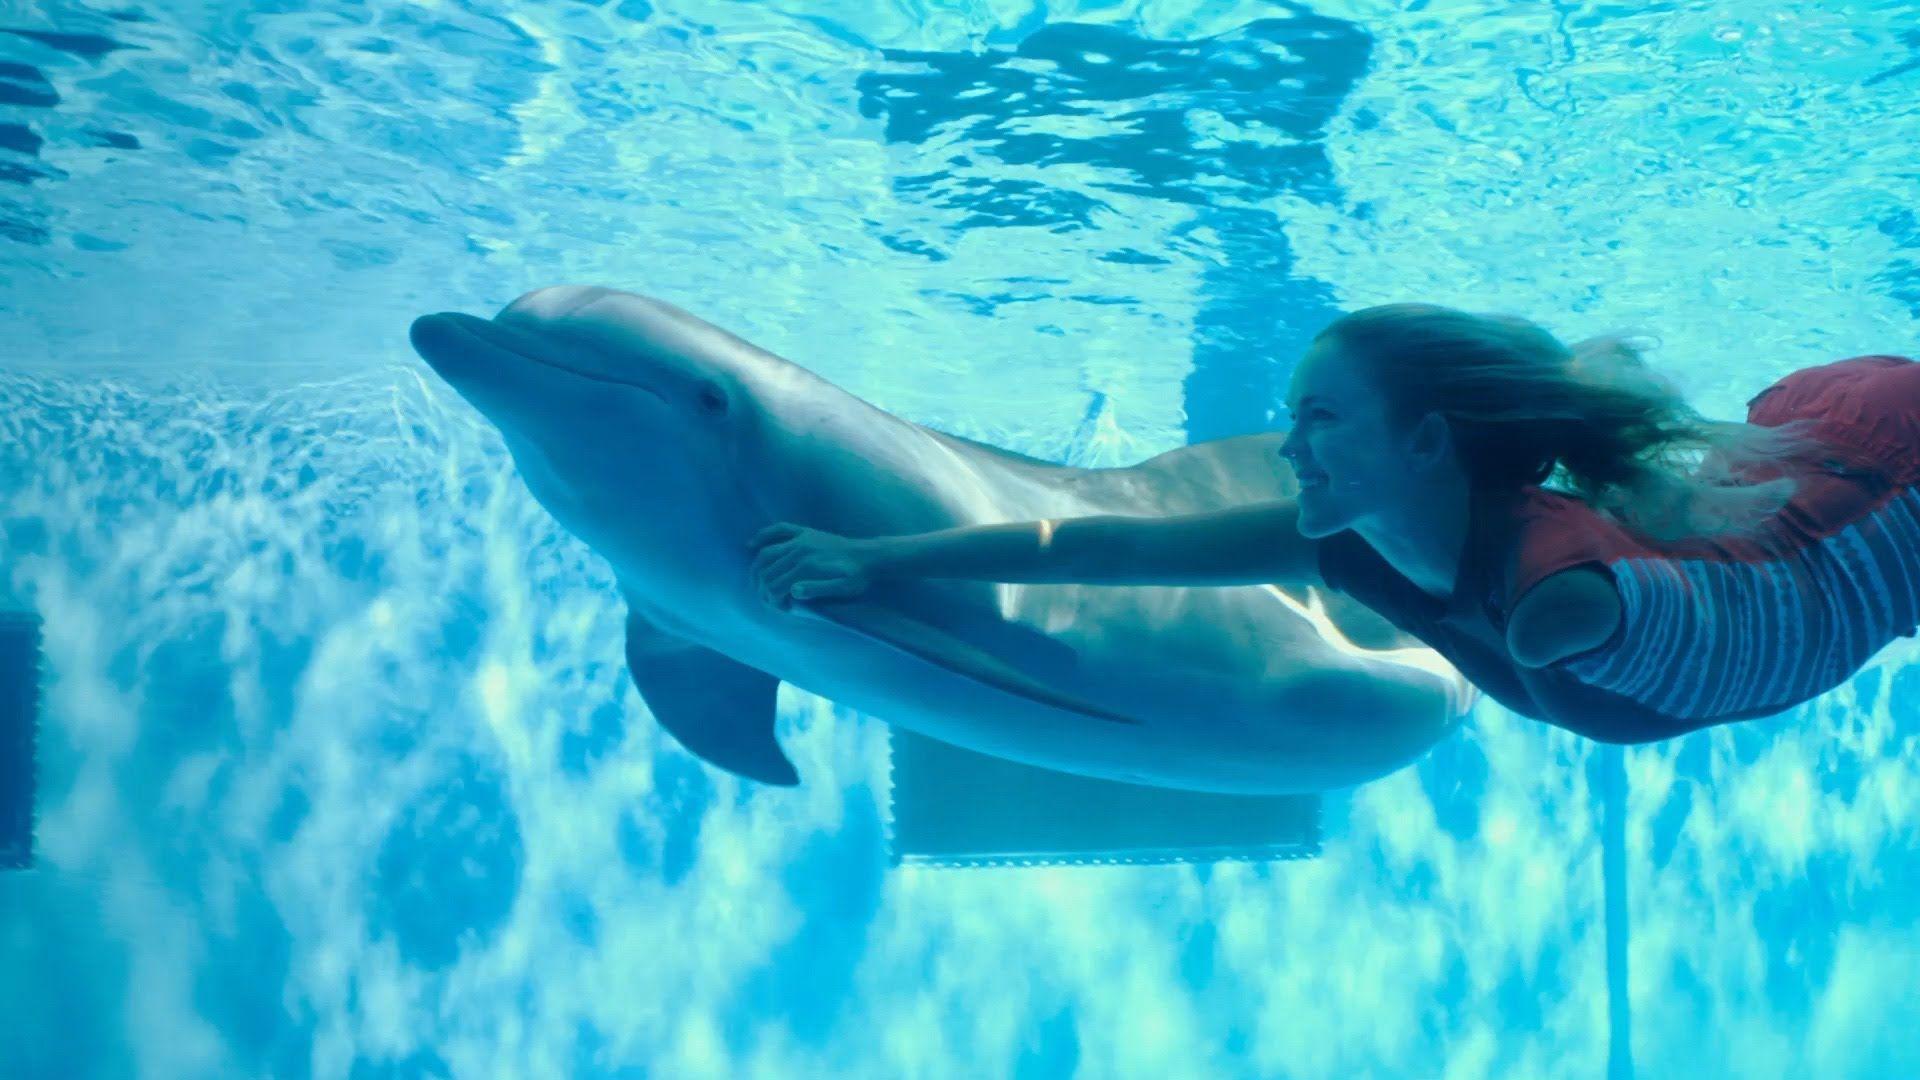 Dolphin vibrator video